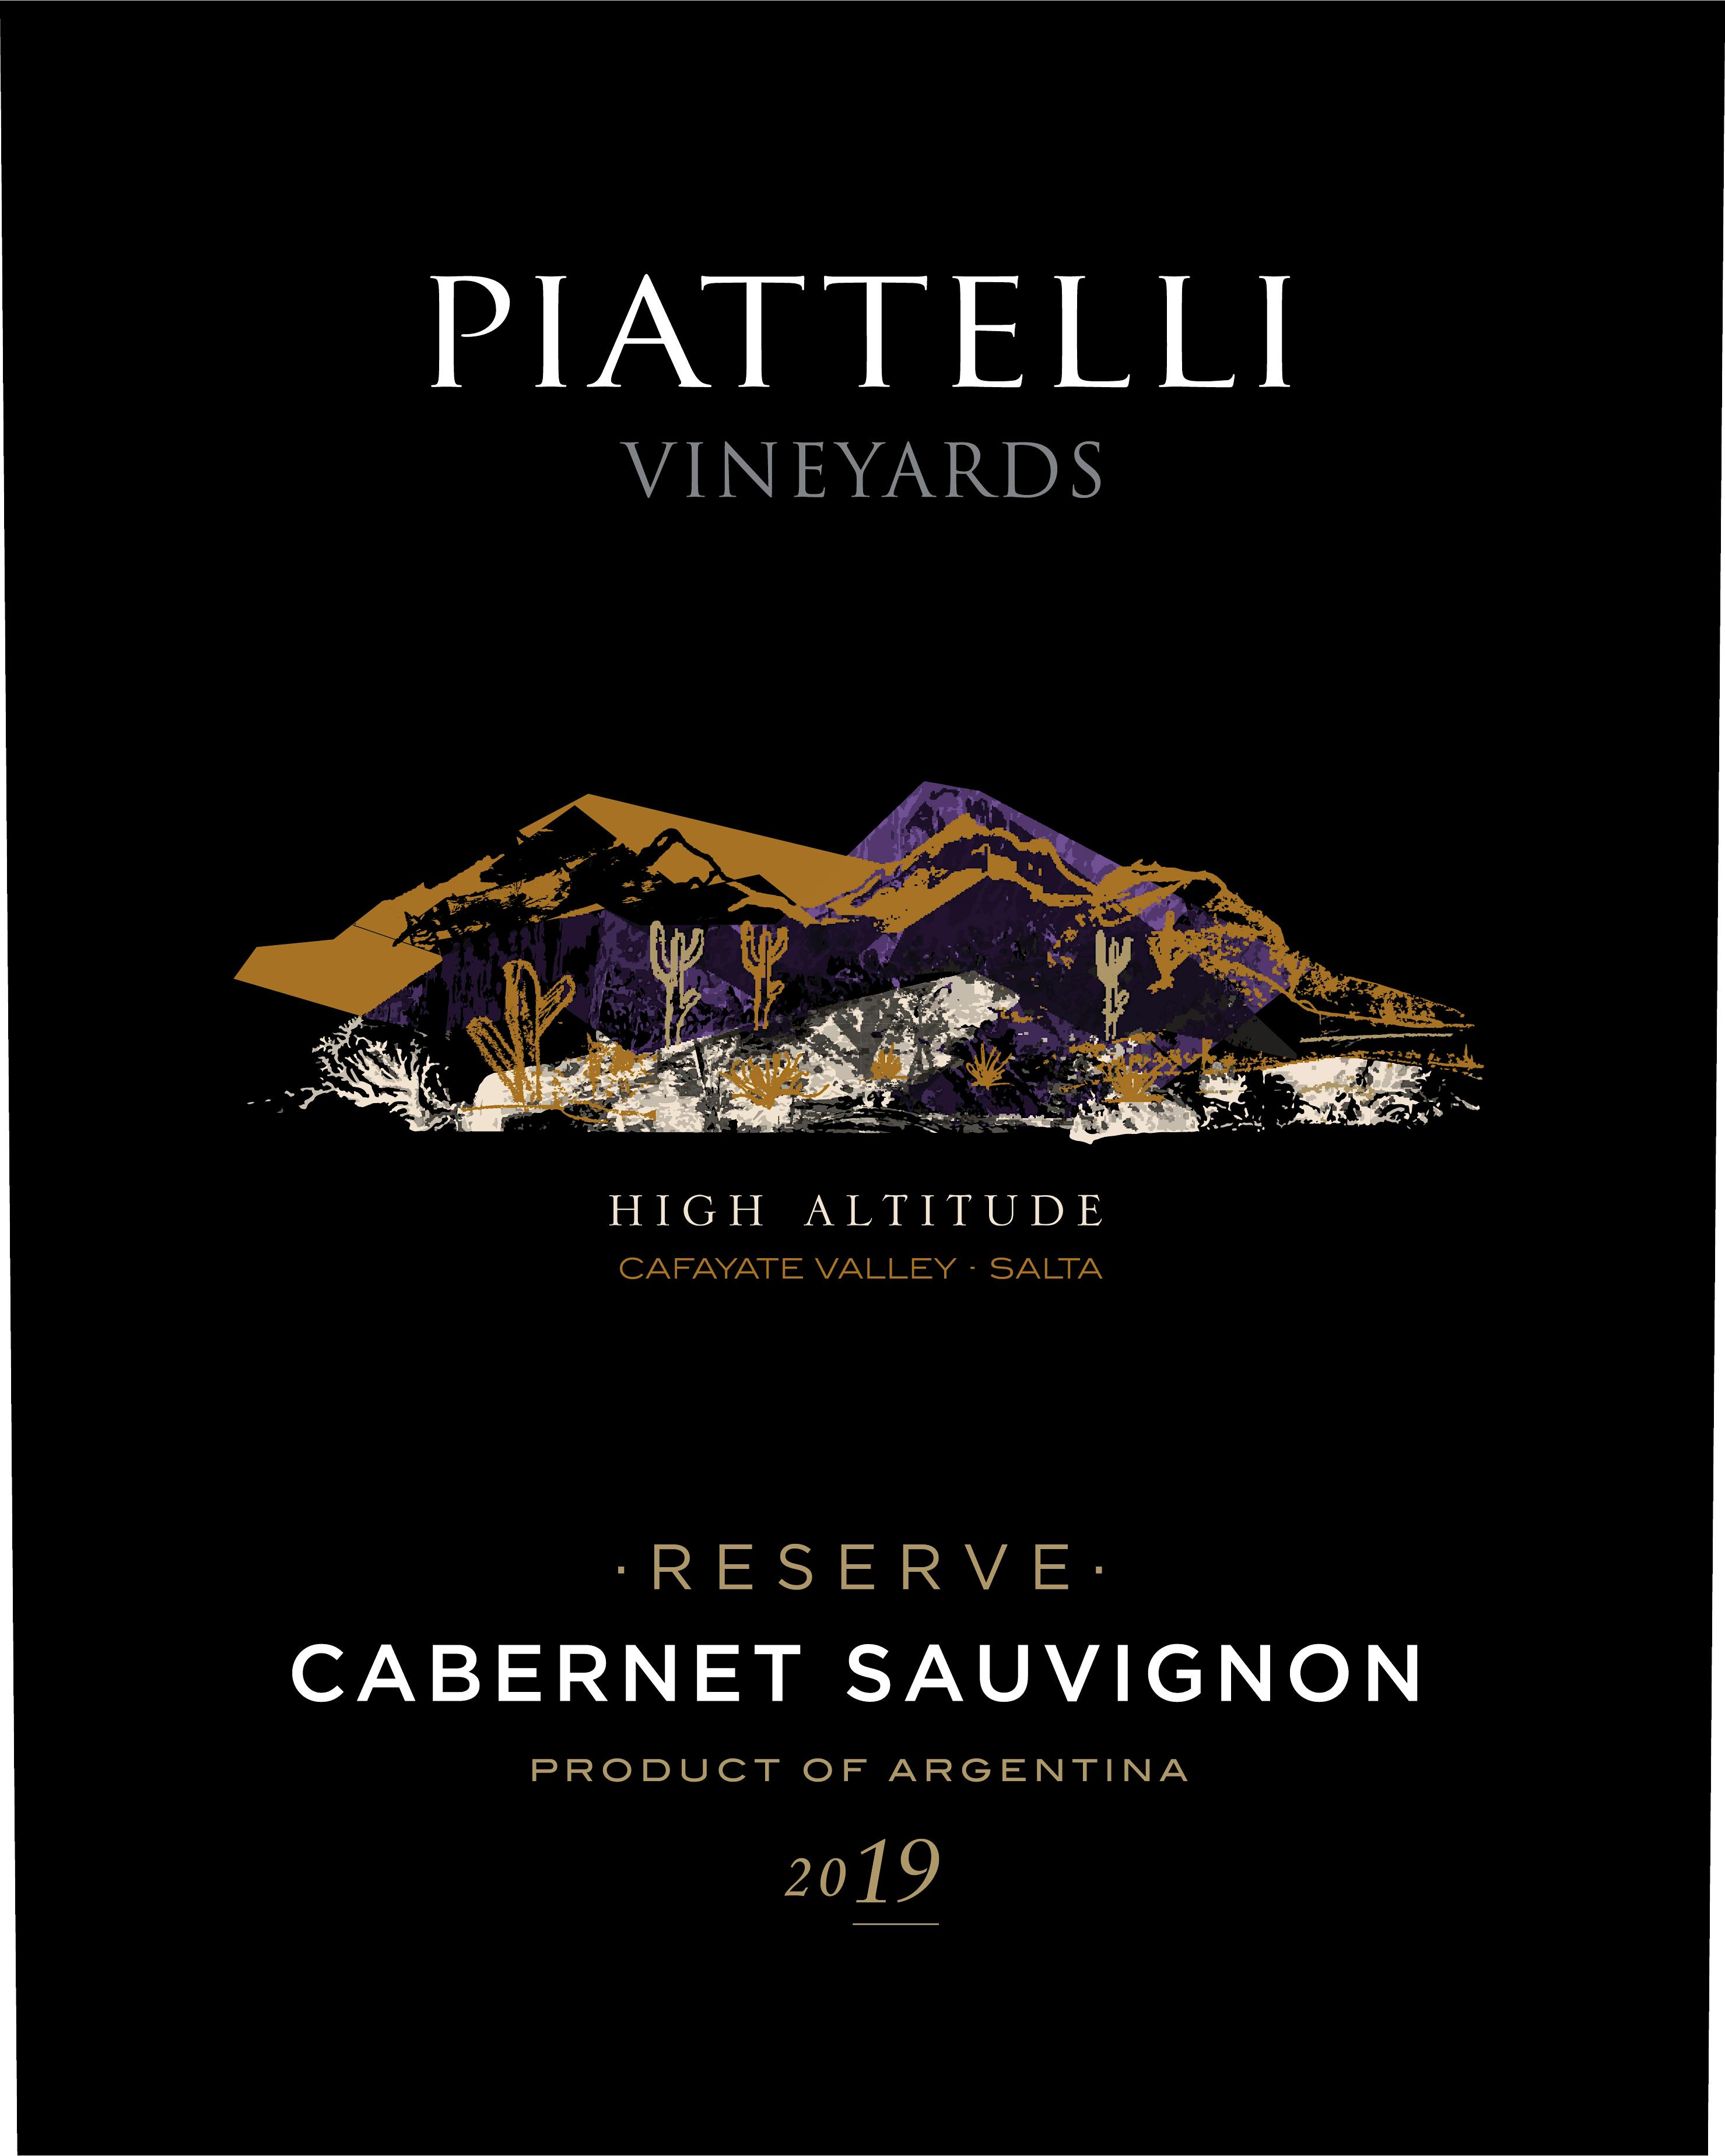 Label for Piattelli